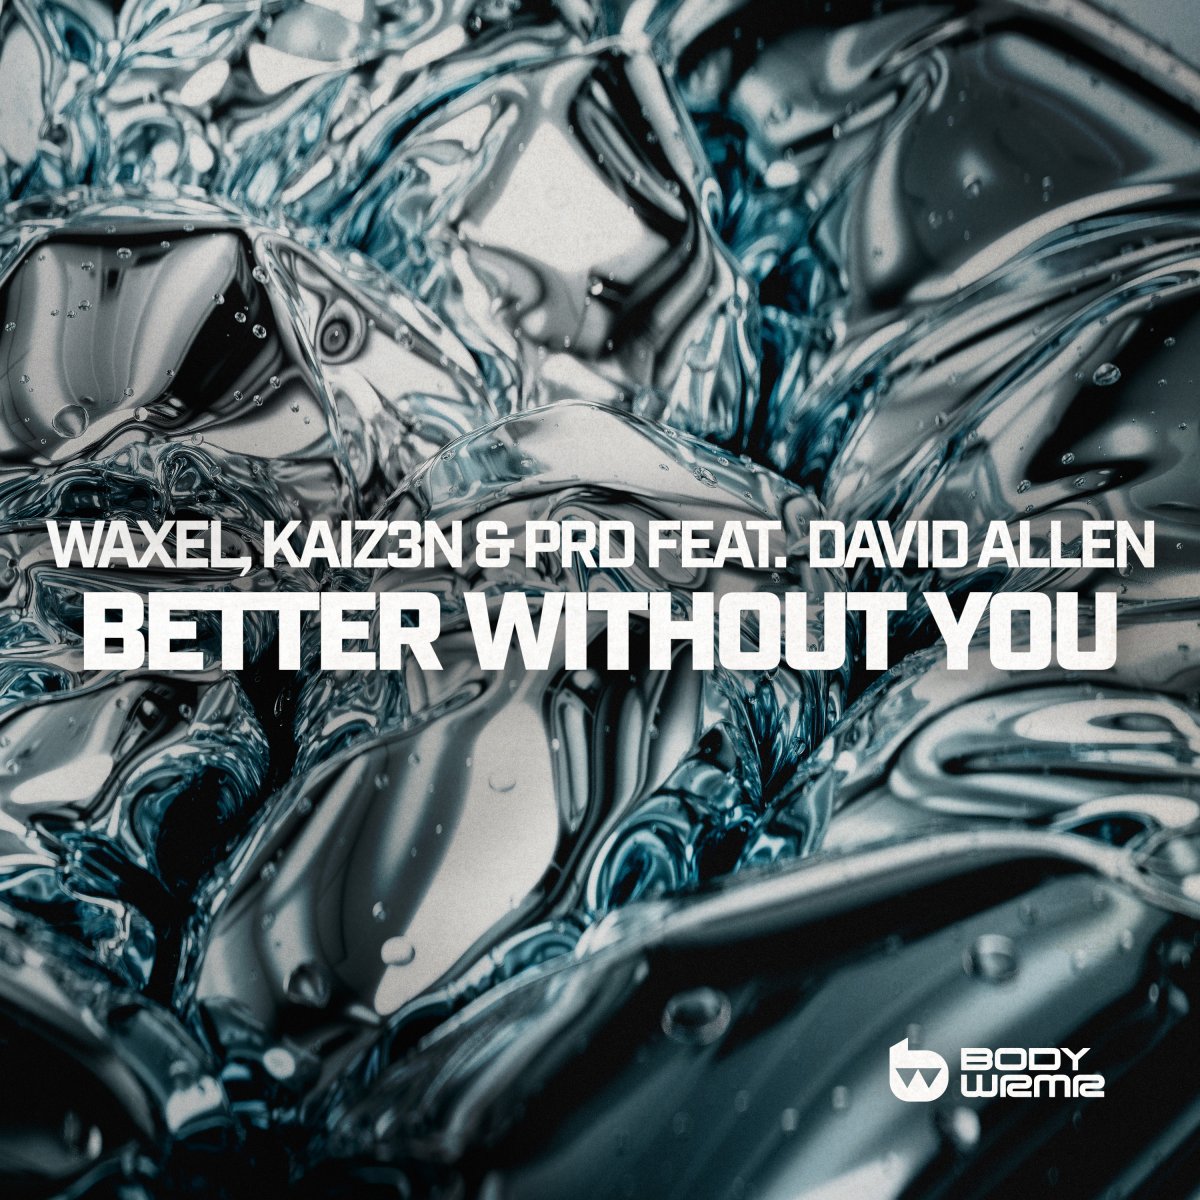 Better Without You - waxel⁠, Kaiz3n⁠ & PRD⁠ feat. David Allen⁠ 